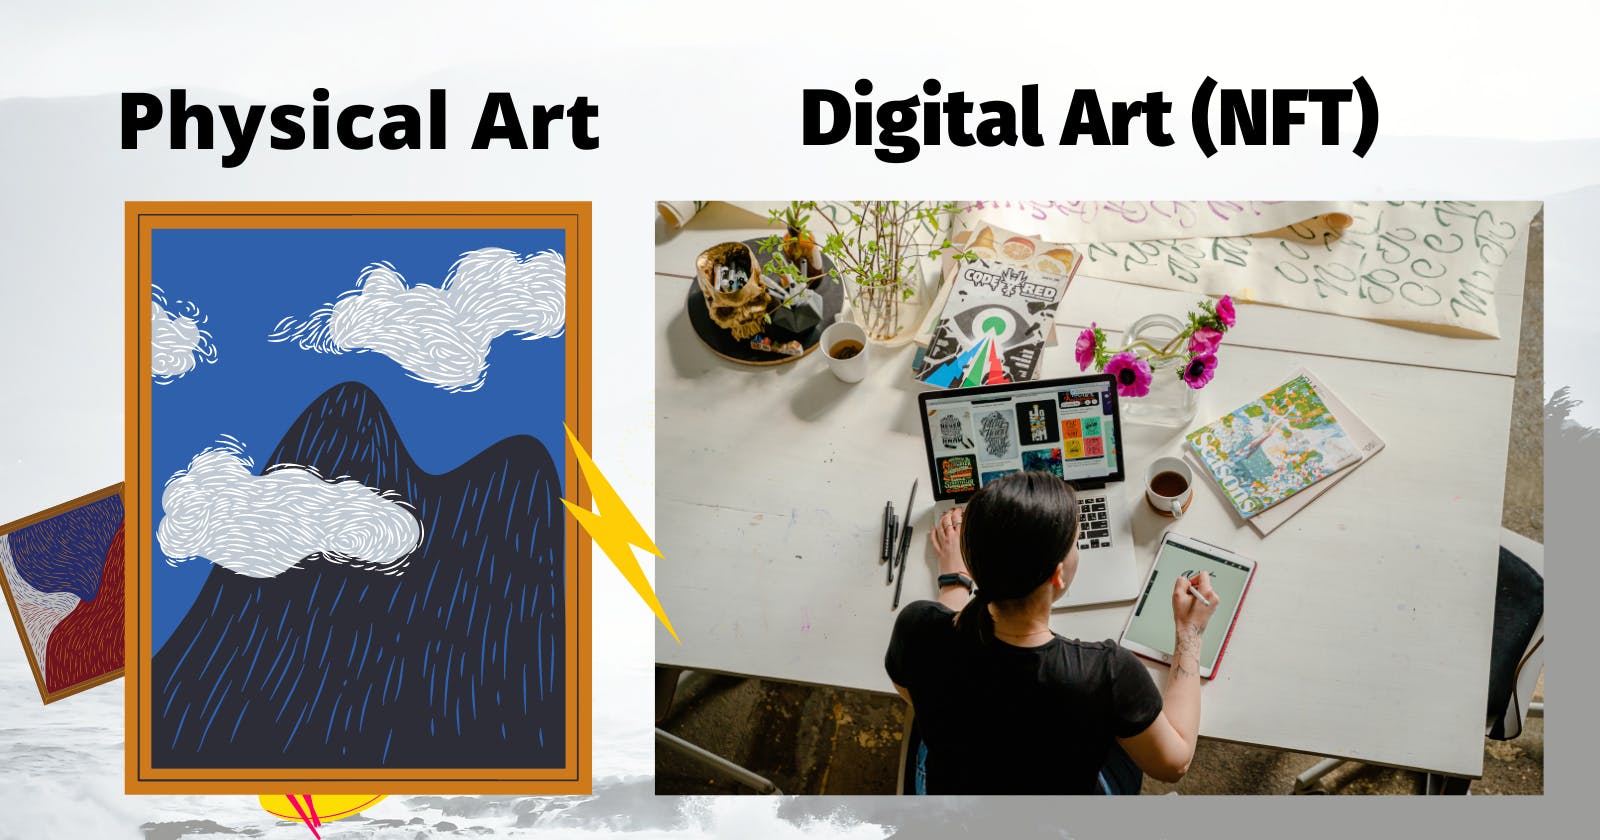 Digital art (NFT) vs Physical art